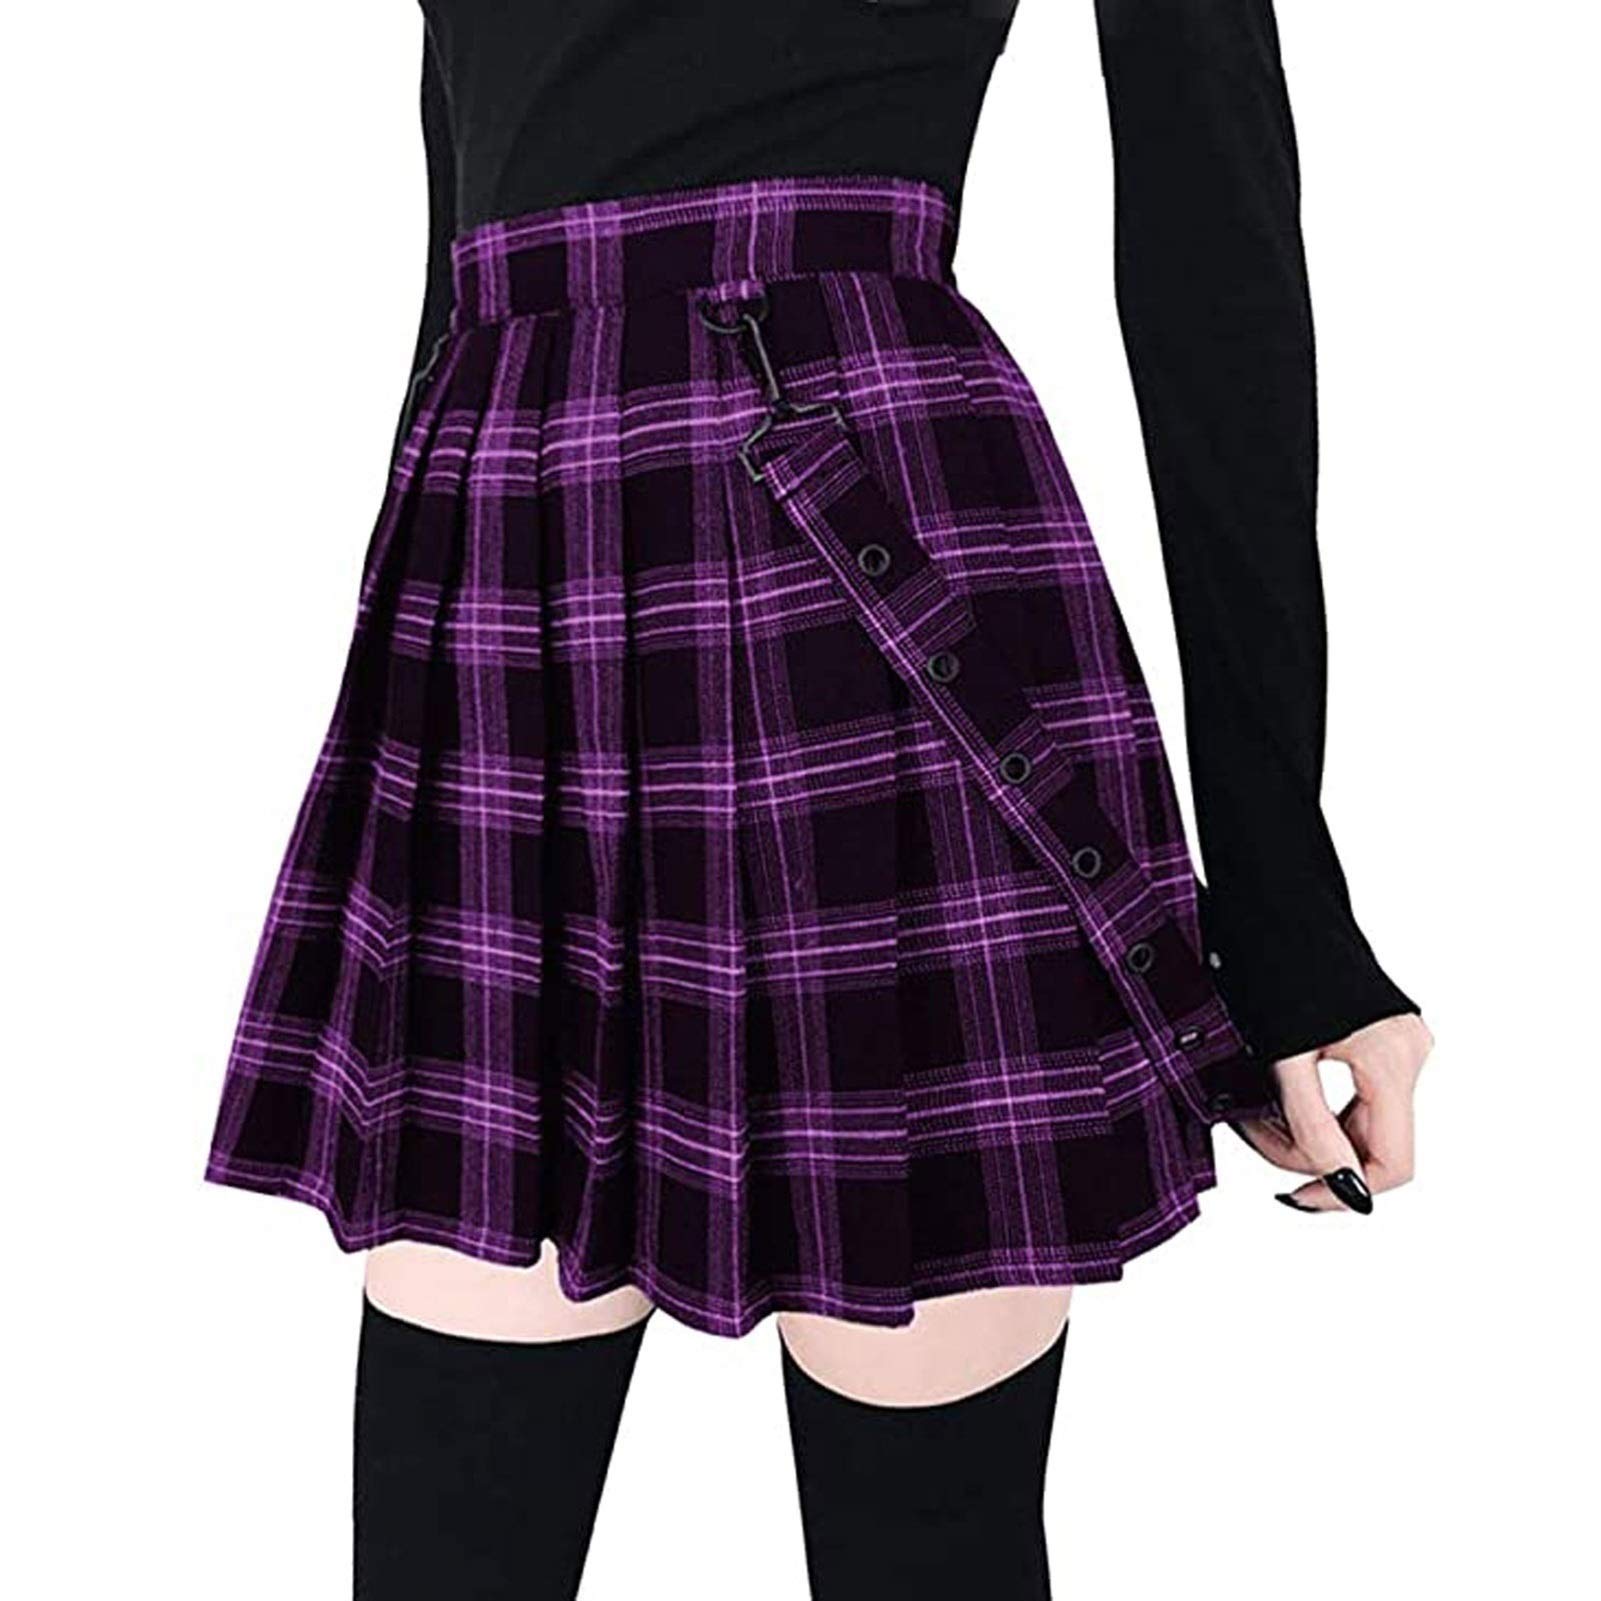 Damen Kilt Rock Kariert Schottischer Kilt Tartan Rot Blau Faltenrock mit Kette Minirock Hohe Taille Kurz Skirt Skater Rock (Color : Purple-B, Size : M)